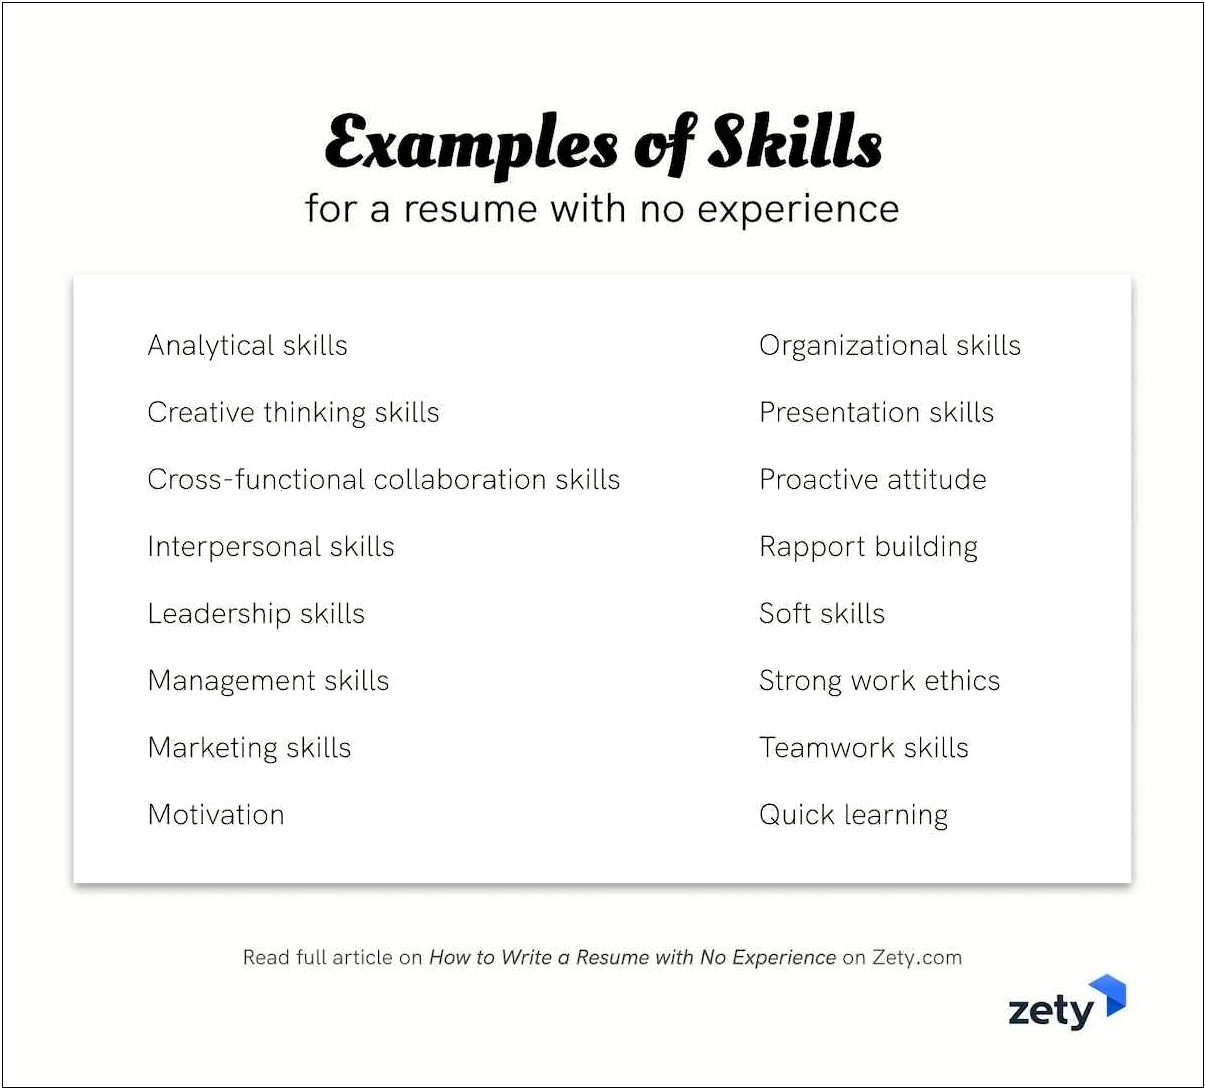 Resume Samples Highlight Skills Not Experience Or School